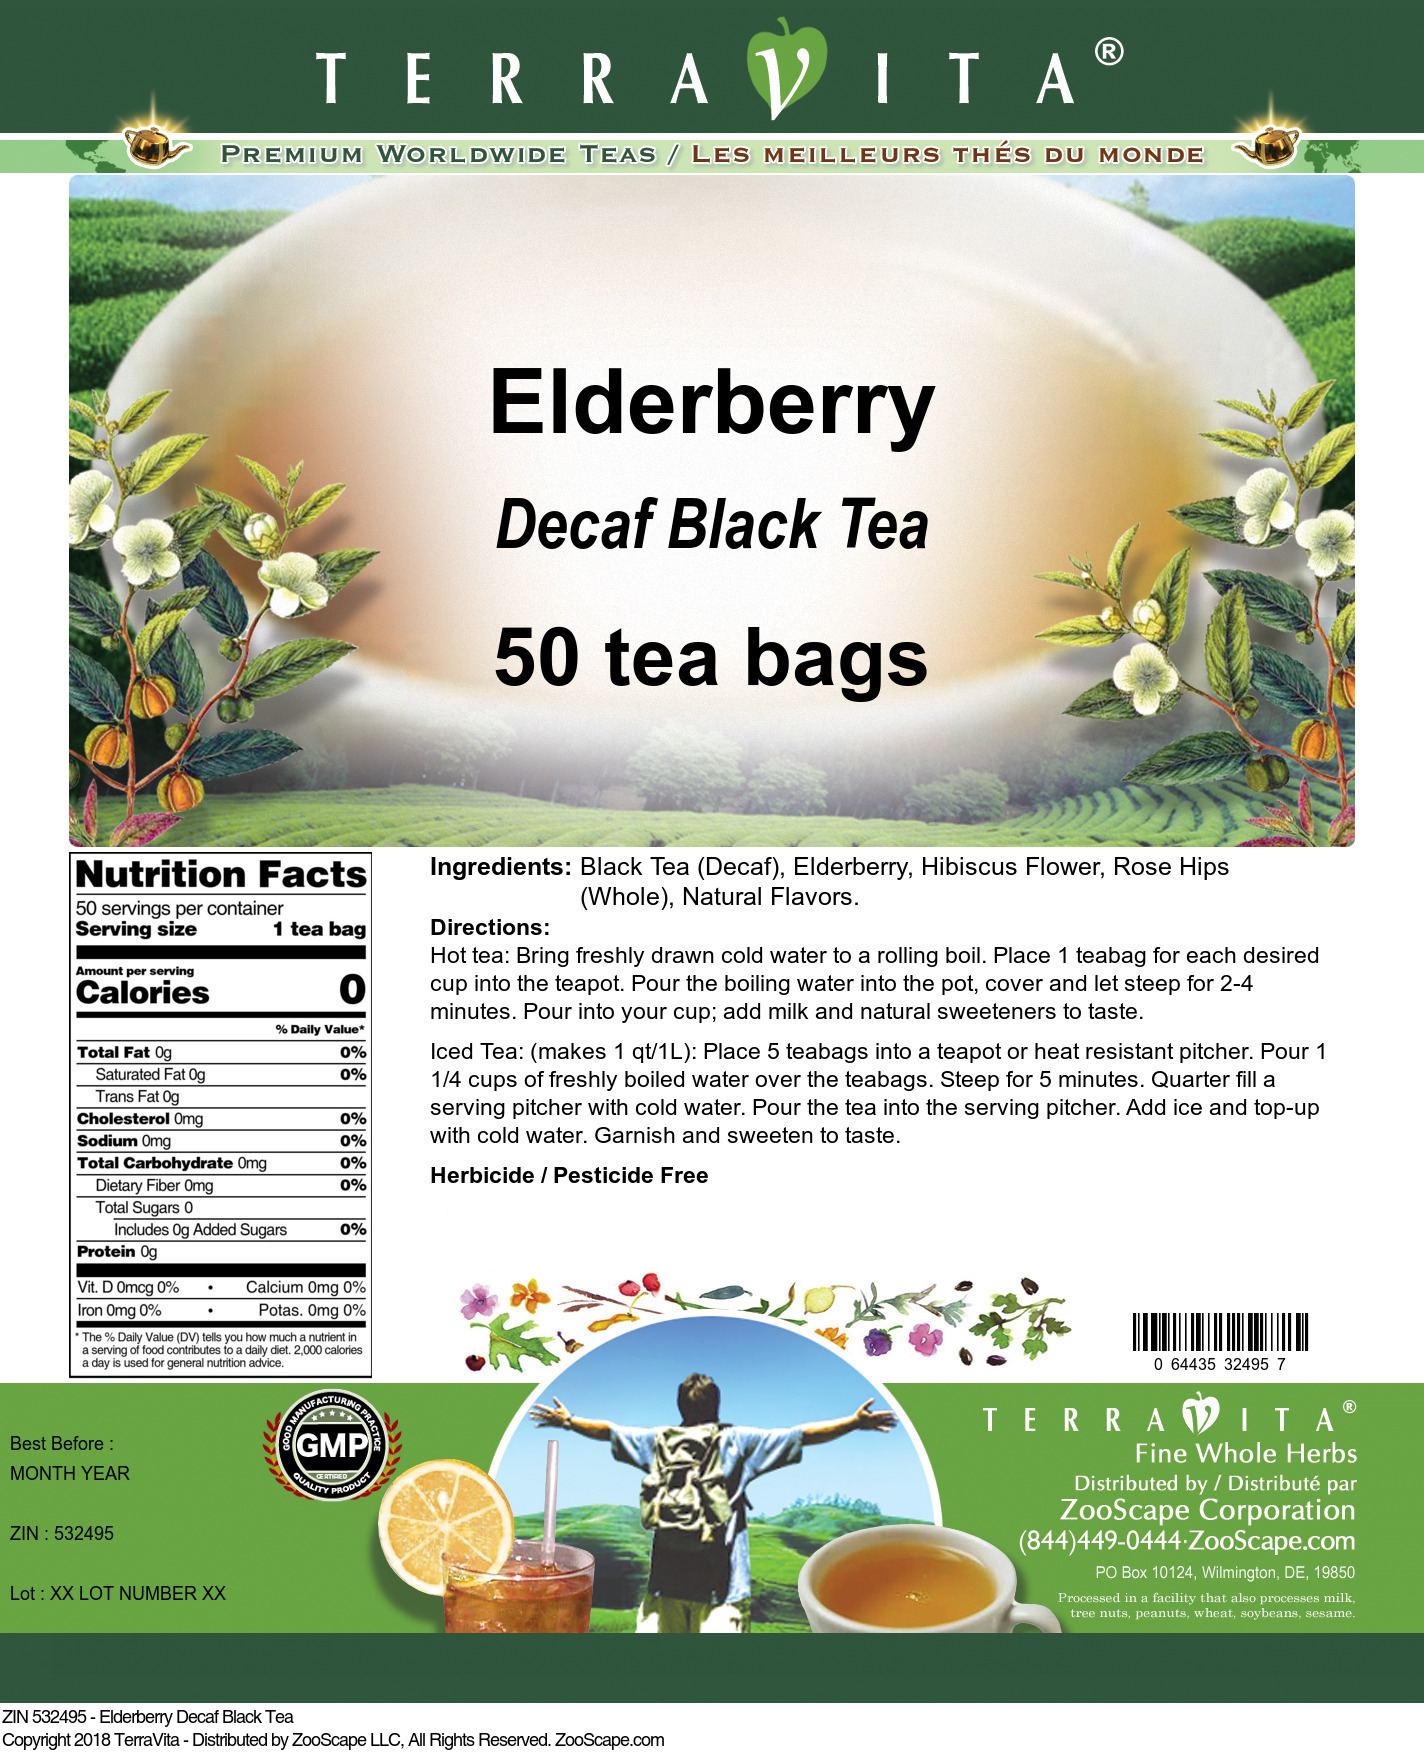 Elderberry Decaf Black Tea - Label